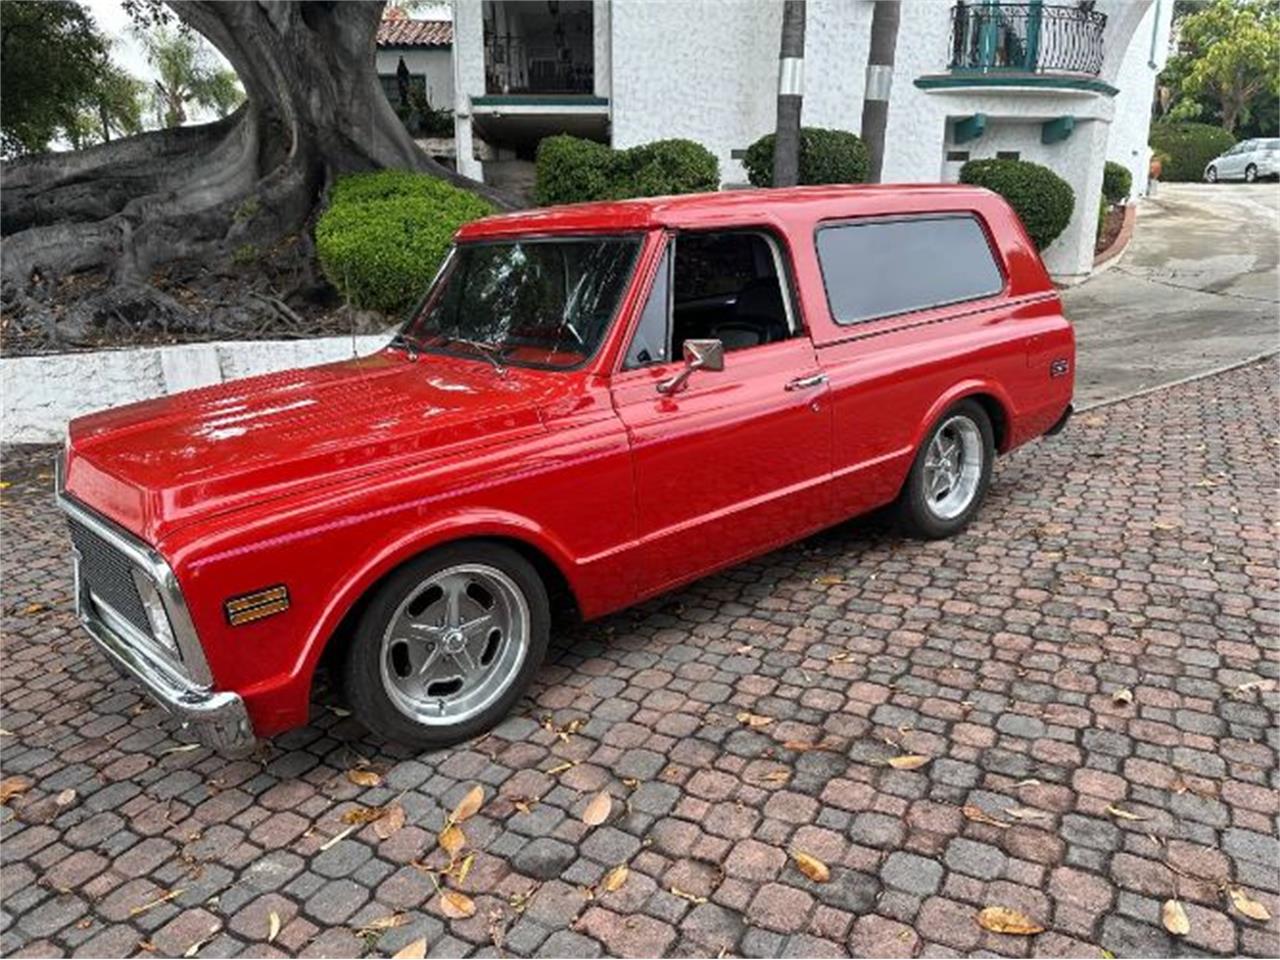 For Sale: 1972 Chevrolet Blazer in Cadillac, Michigan for sale in Cadillac, MI